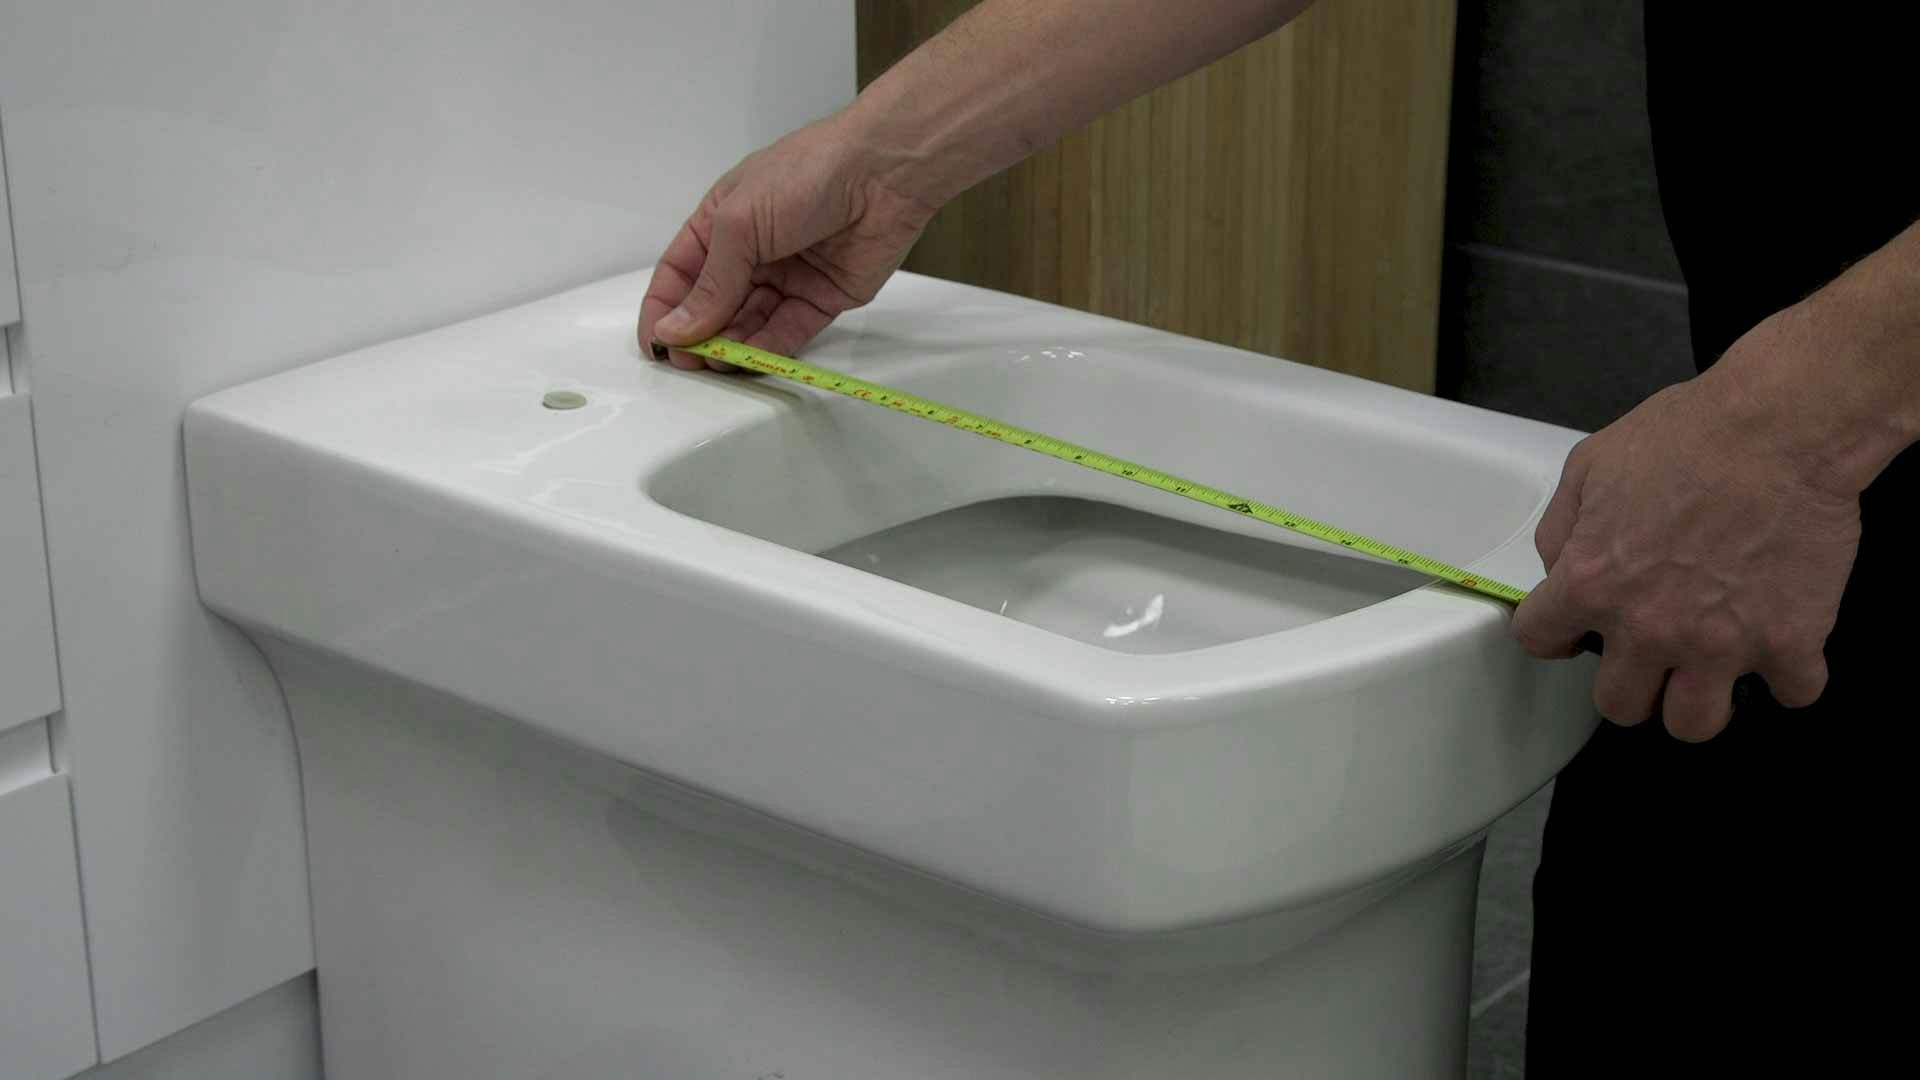 Measuring length of toilet